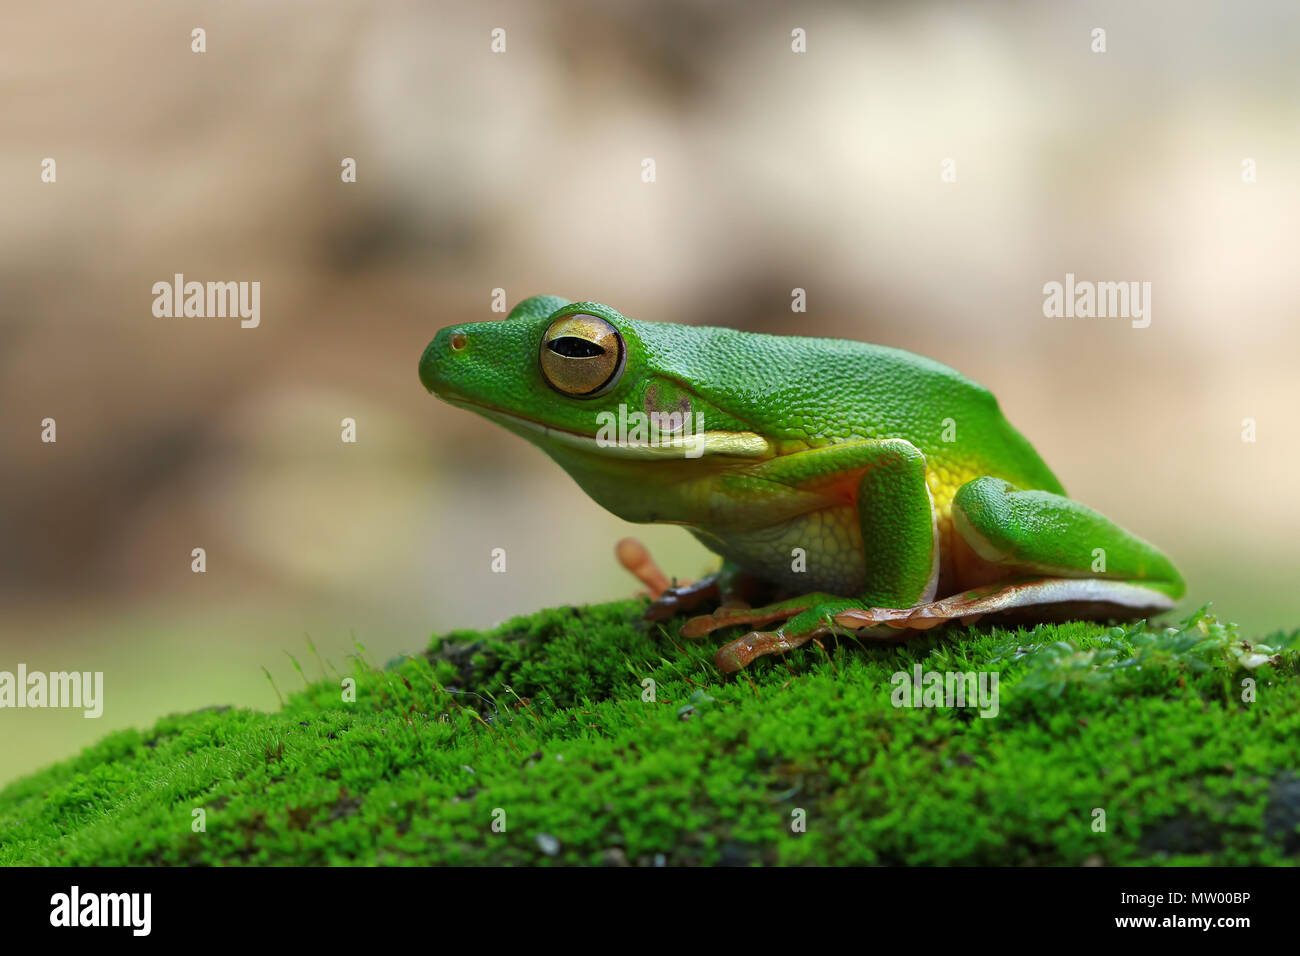 White-lipped tree frog on moss Stock Photo